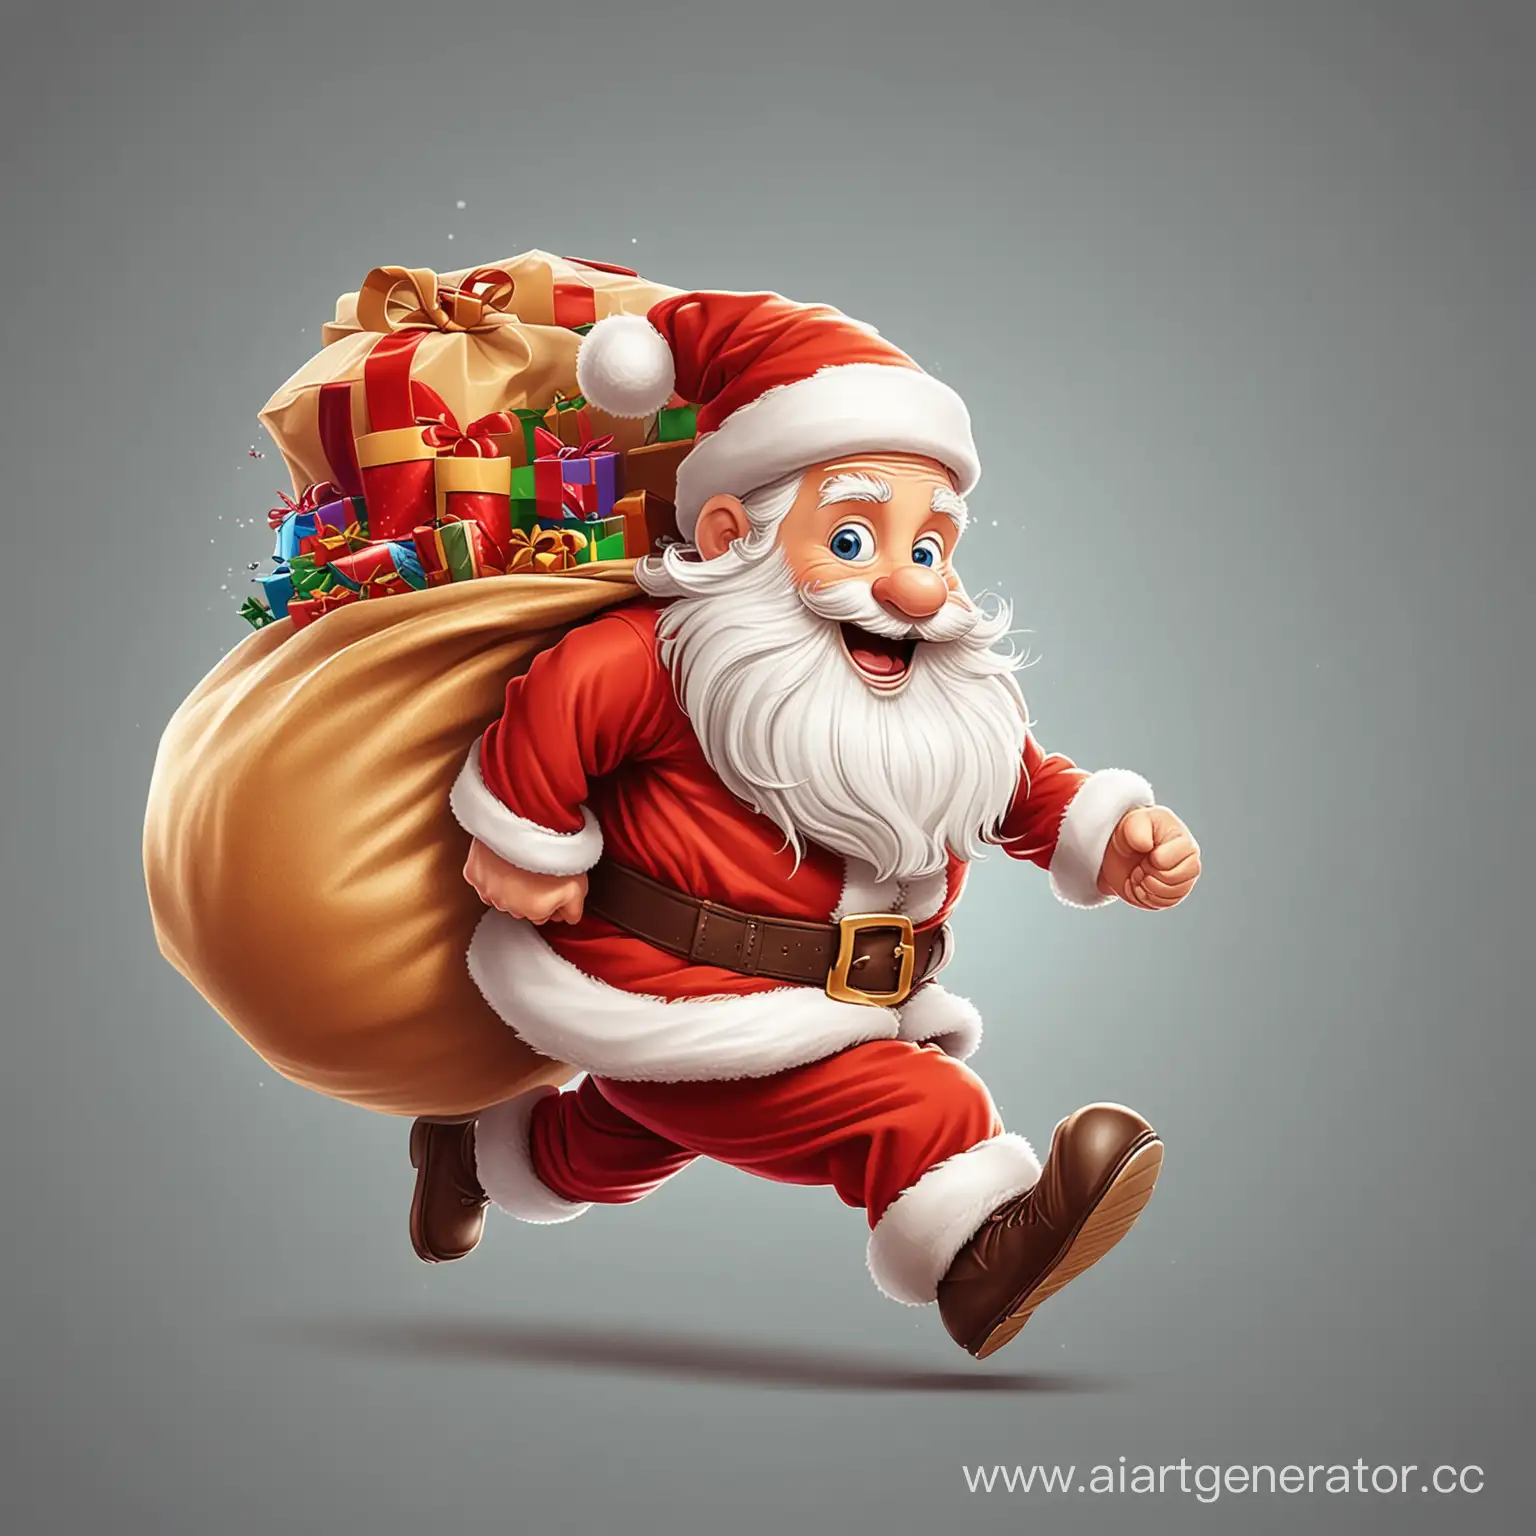 Joyful-Cartoon-Santa-Claus-Delivering-Gifts-in-a-Vibrant-Winter-Wonderland